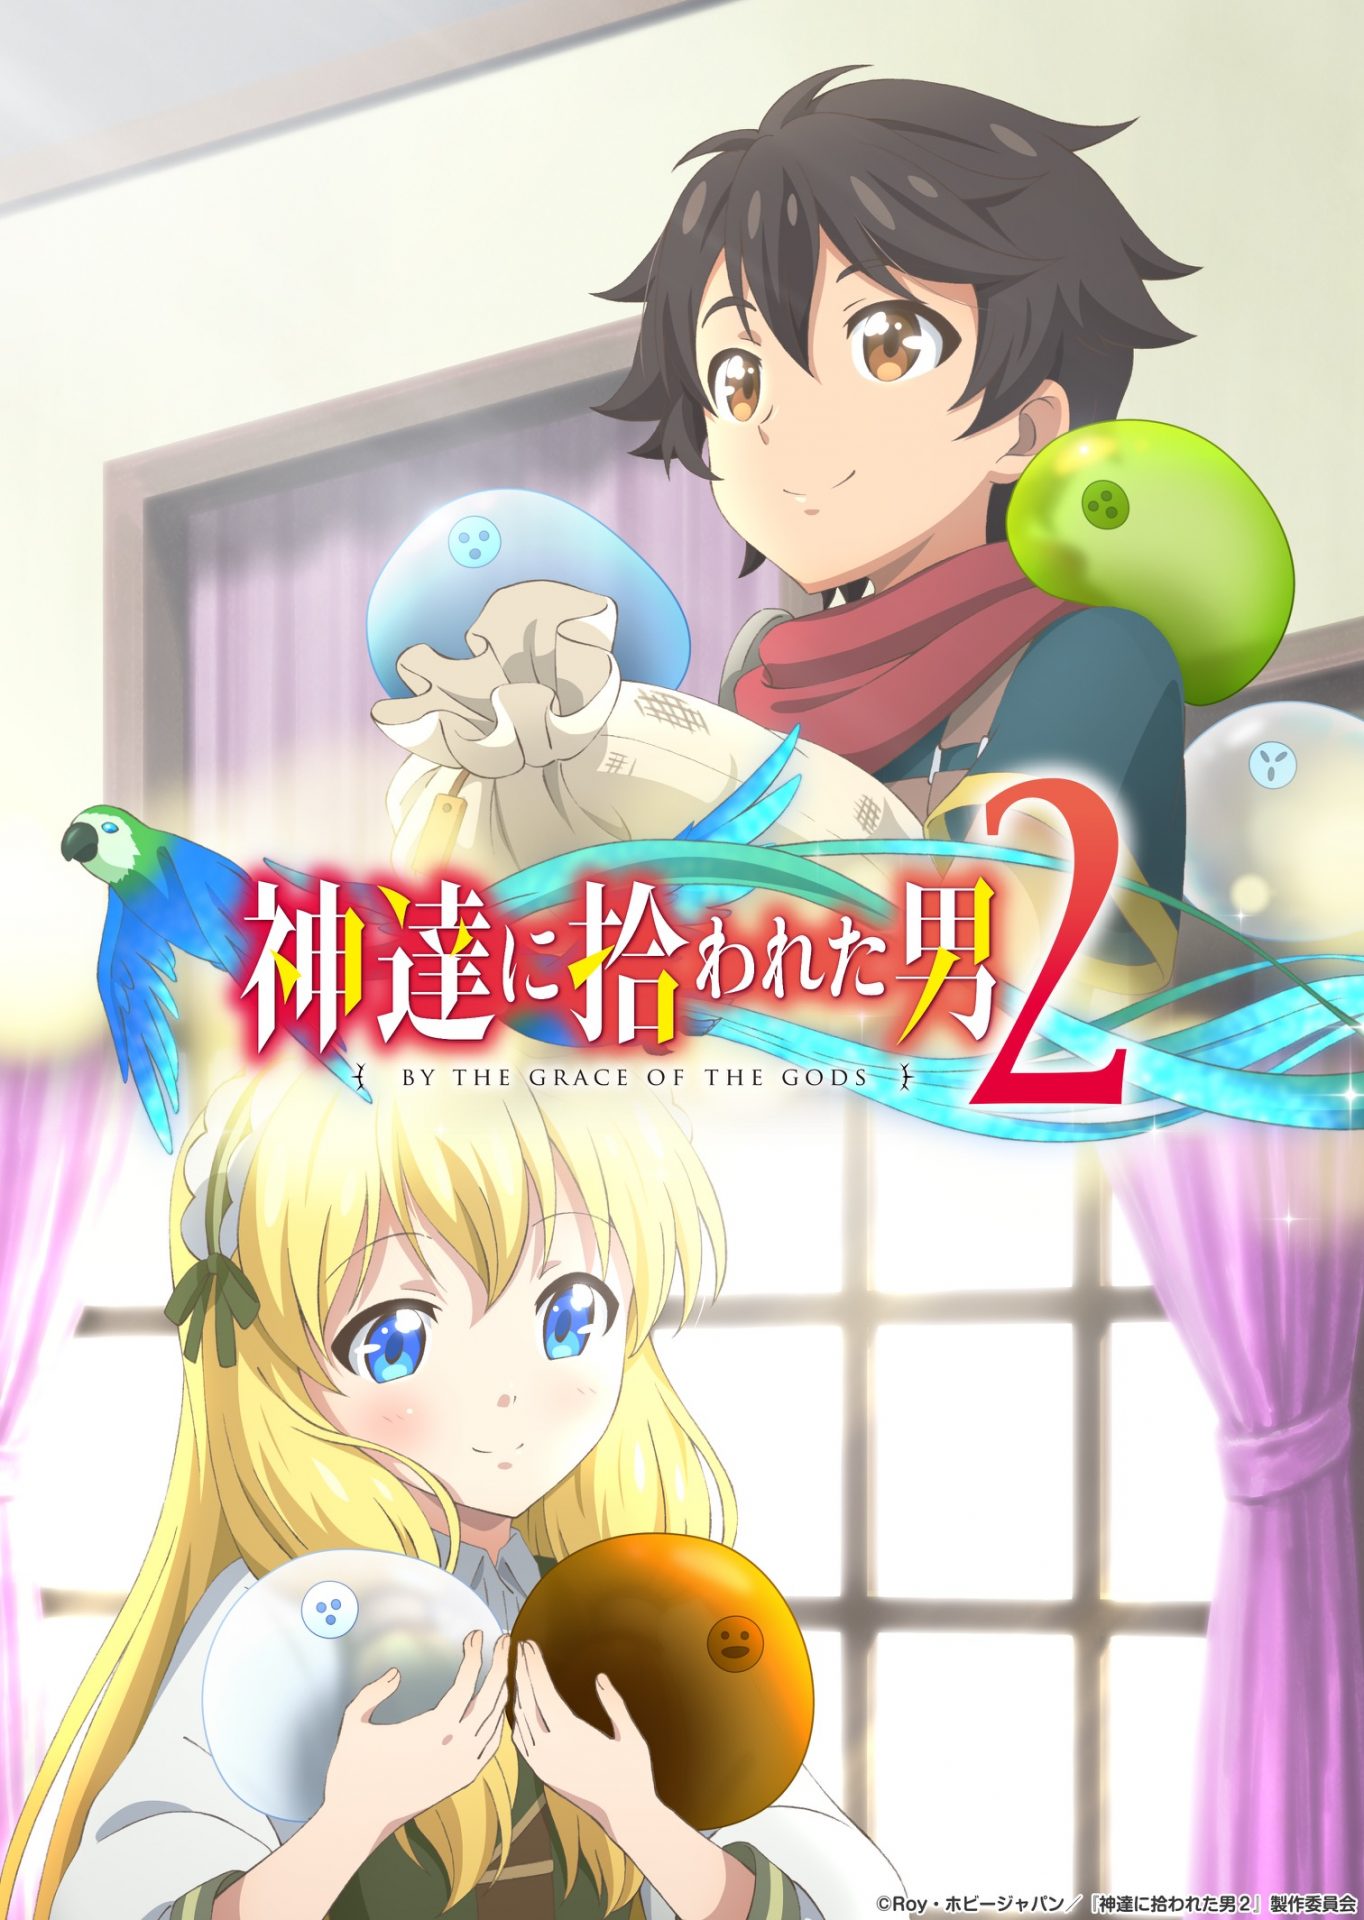 L'anime Kamitachi ni Hirowareta Otoko Saison 2, annoncé - Adala News